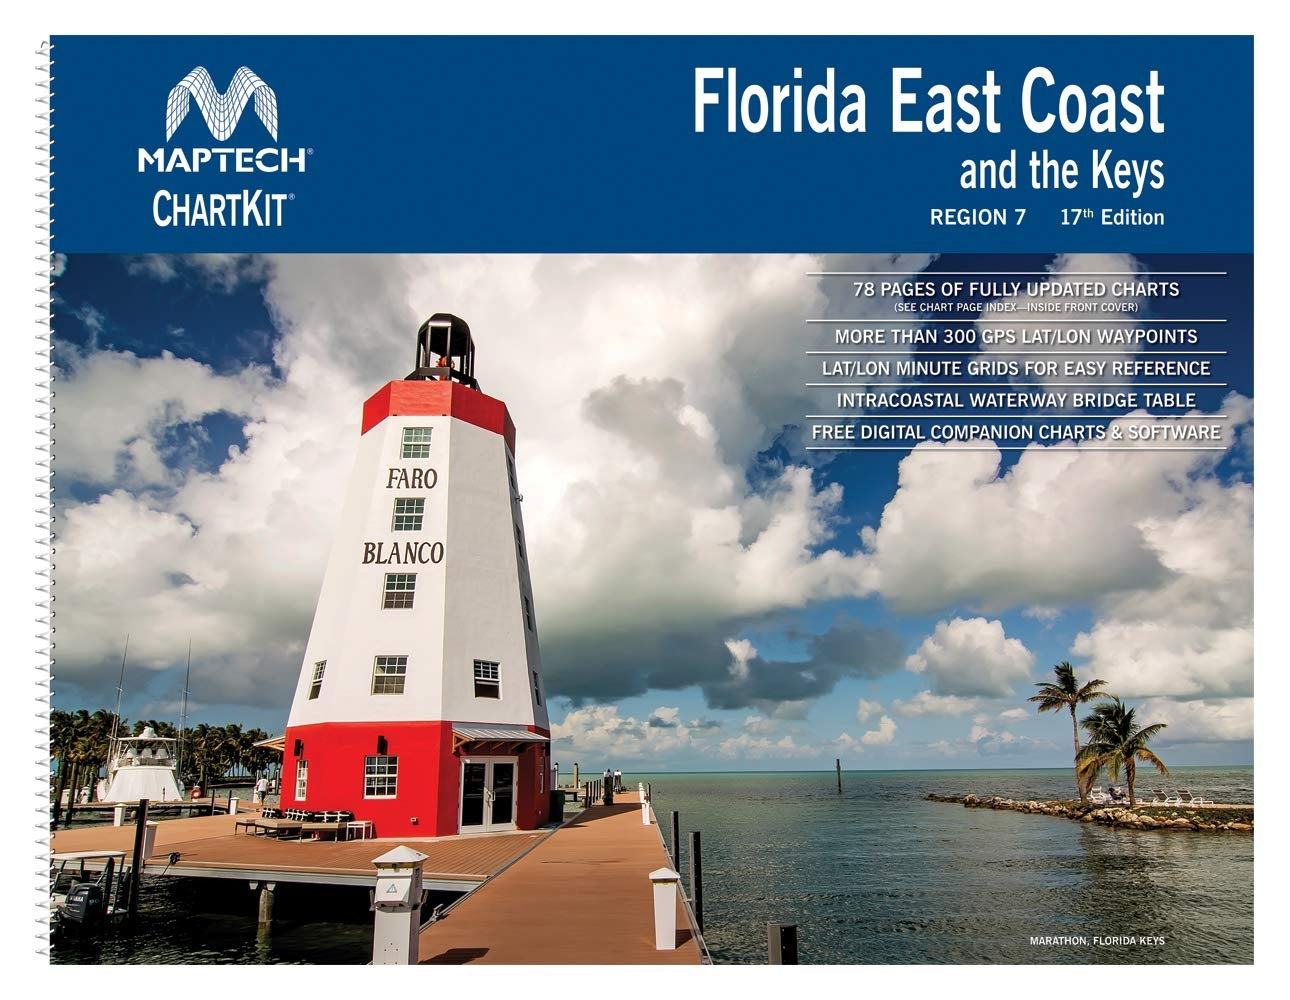 Florida East Coast and the Keys Region 7 17th Edition Richardson's Maptech Chartkit